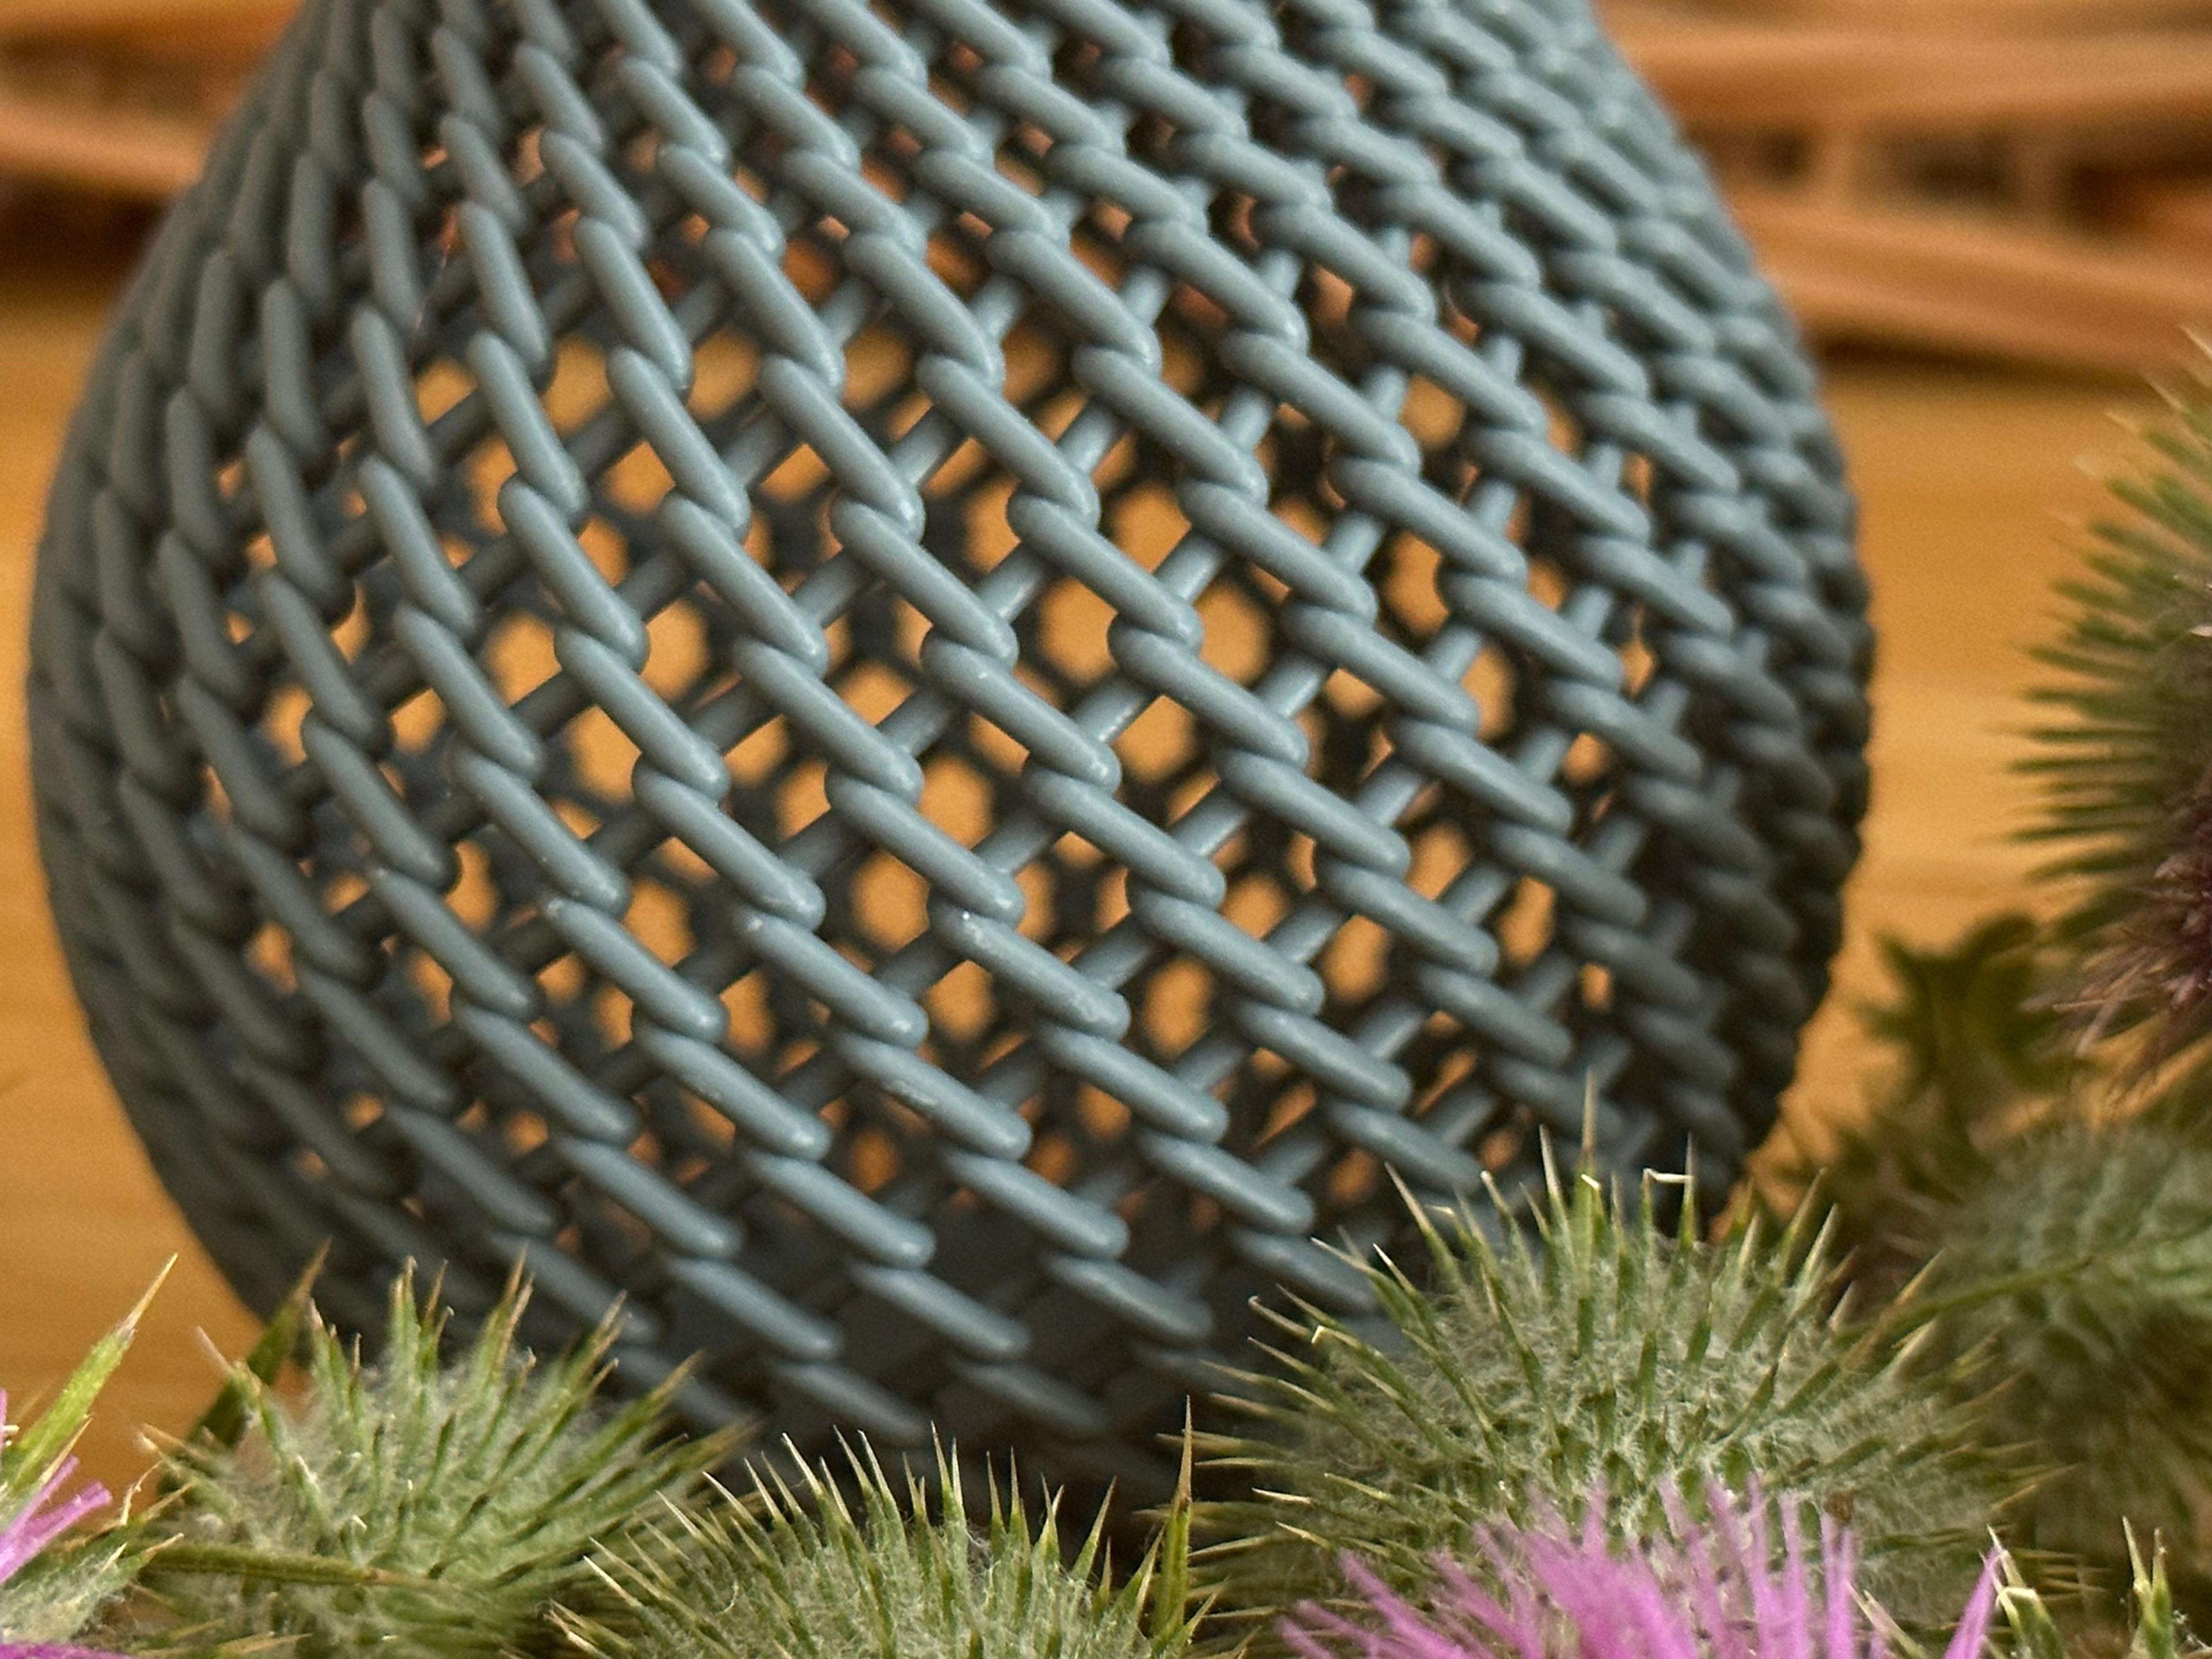 Round Chain Link Vase - Resin 3d model